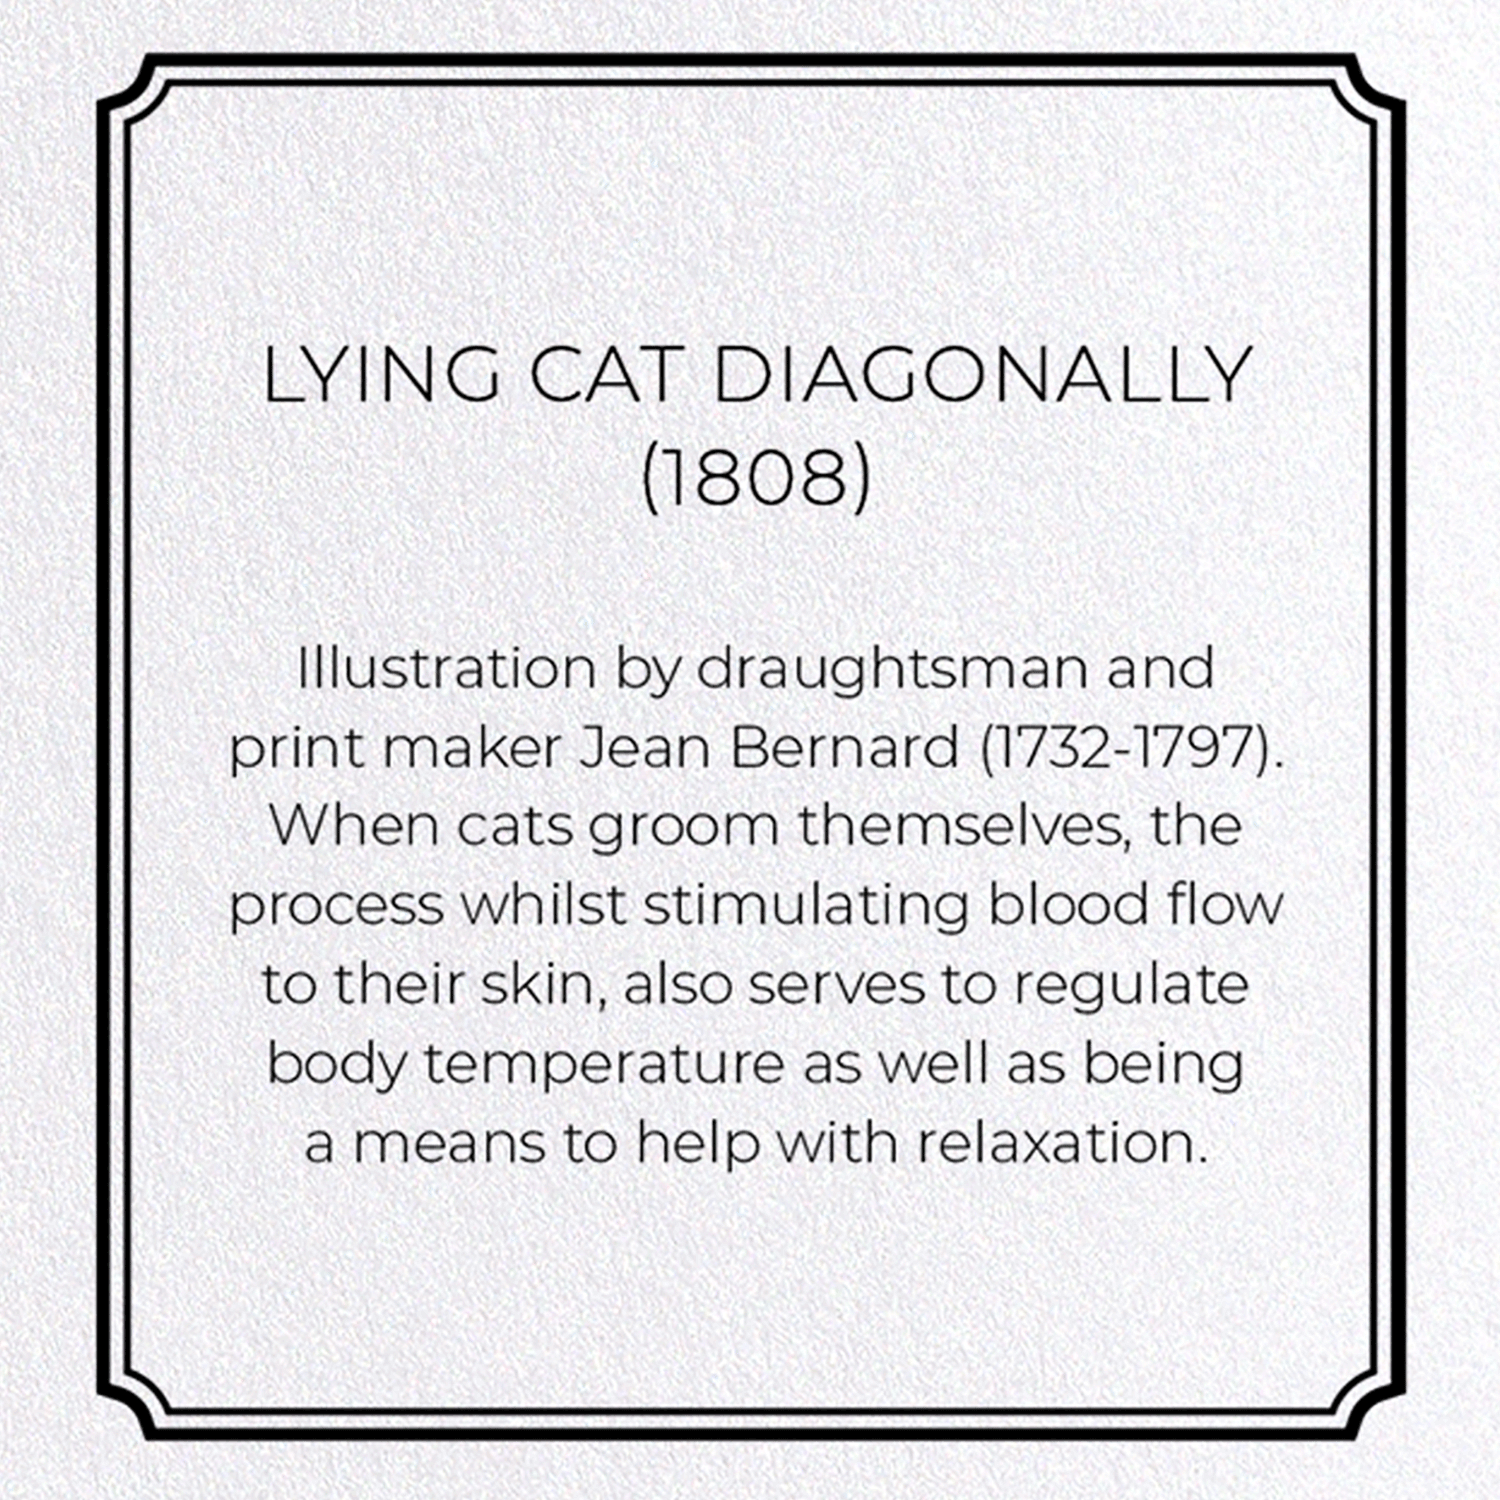 LYING CAT DIAGONALLY (1808)